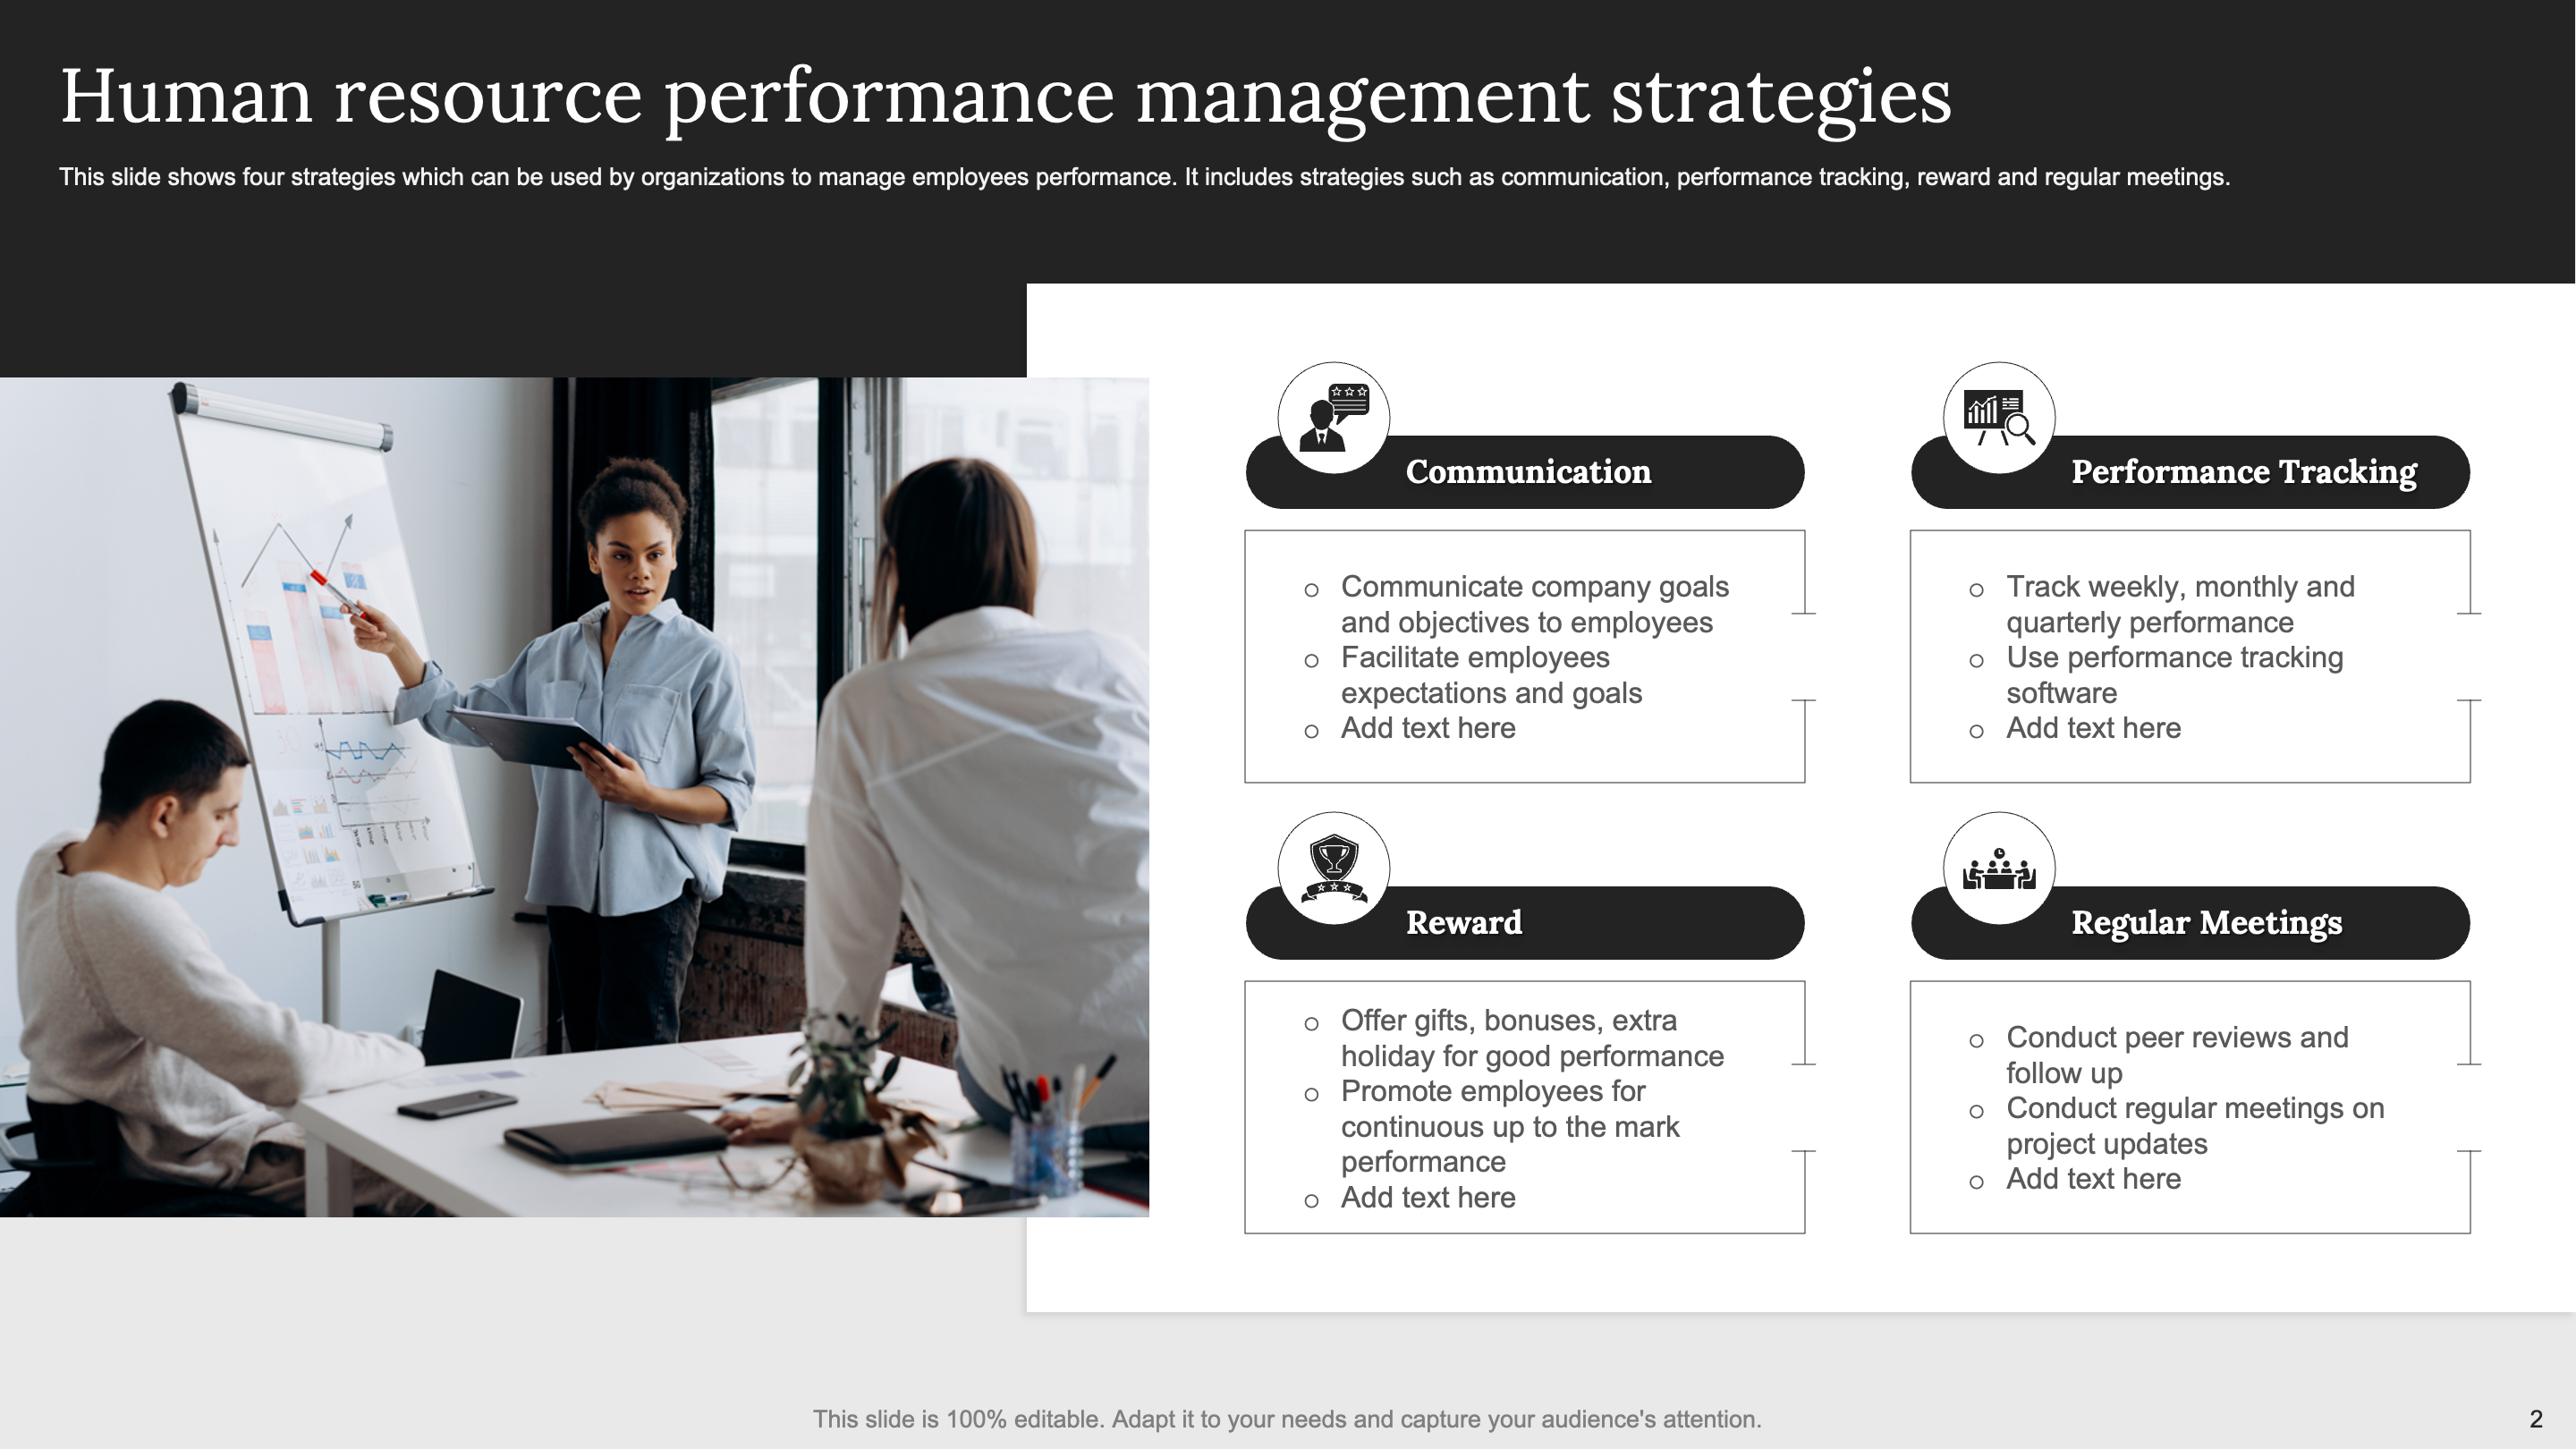 Human Resource Performance Management Strategies